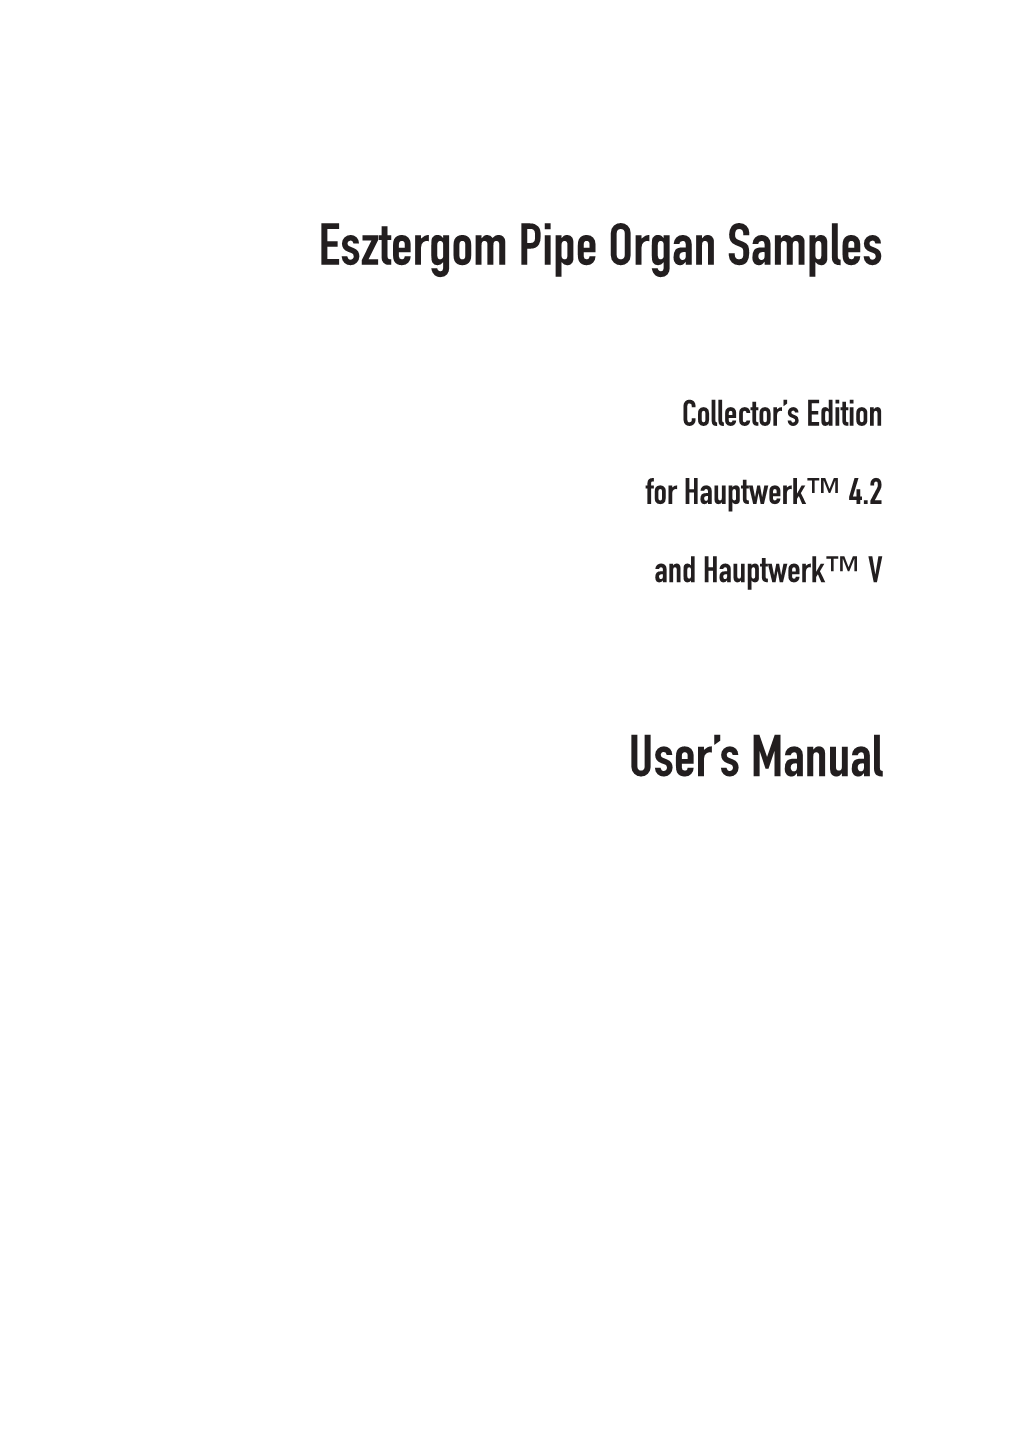 Esztergom Pipe Organ Samples User's Manual